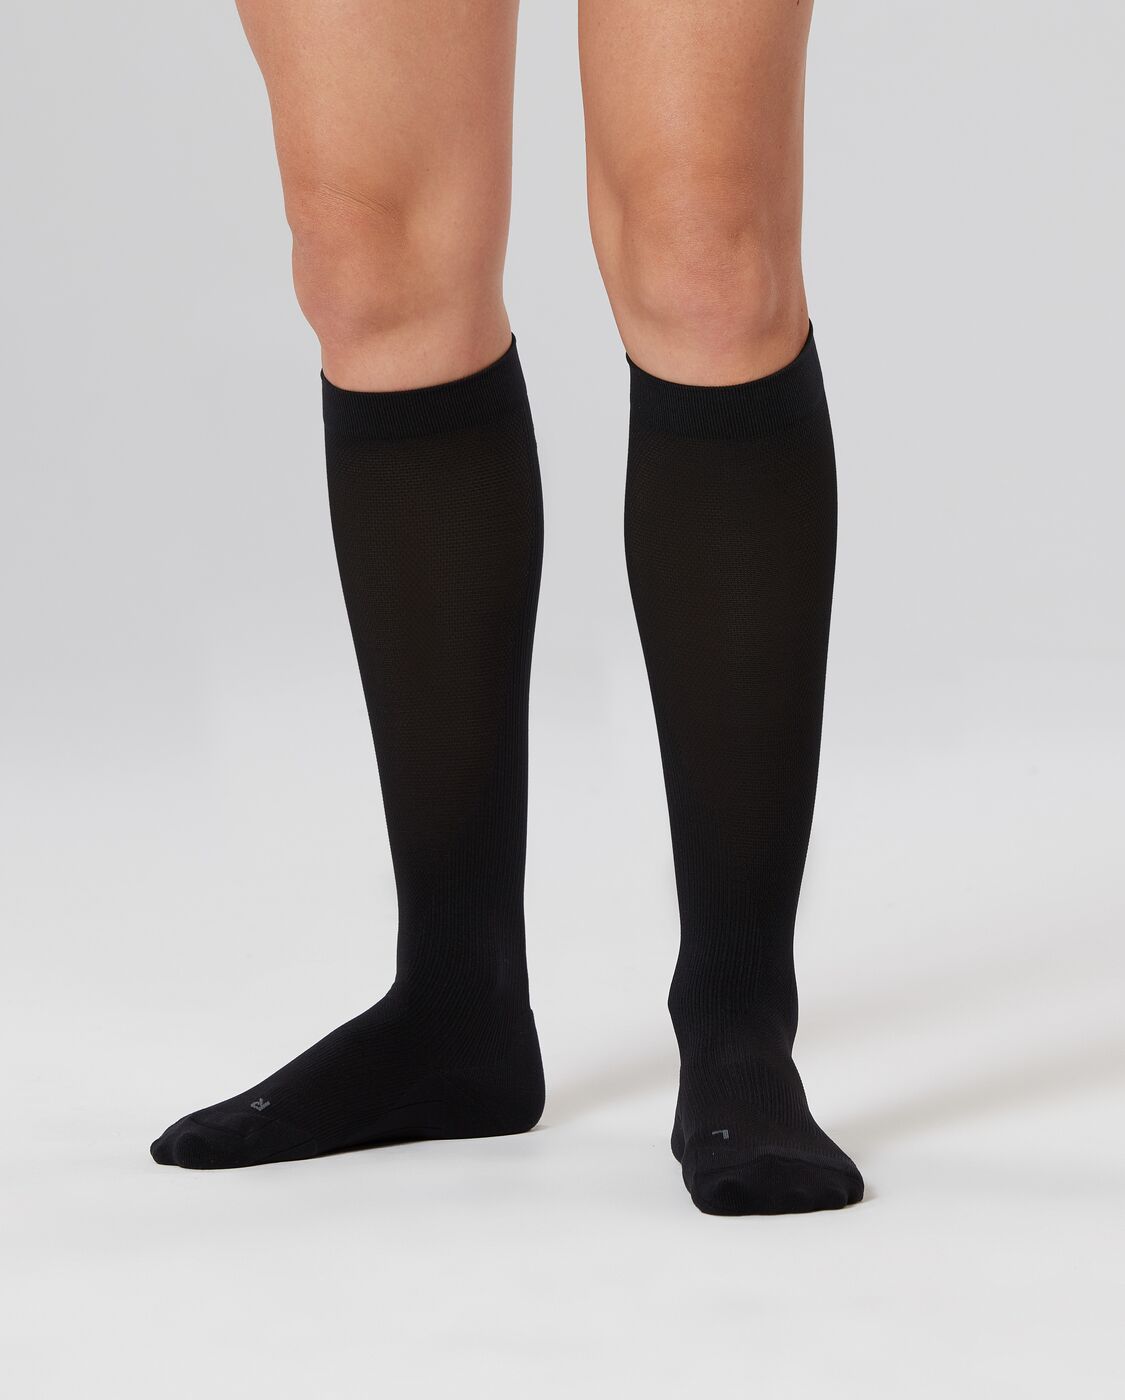 Perf Run Knee Length Compression Socks, Black/Black